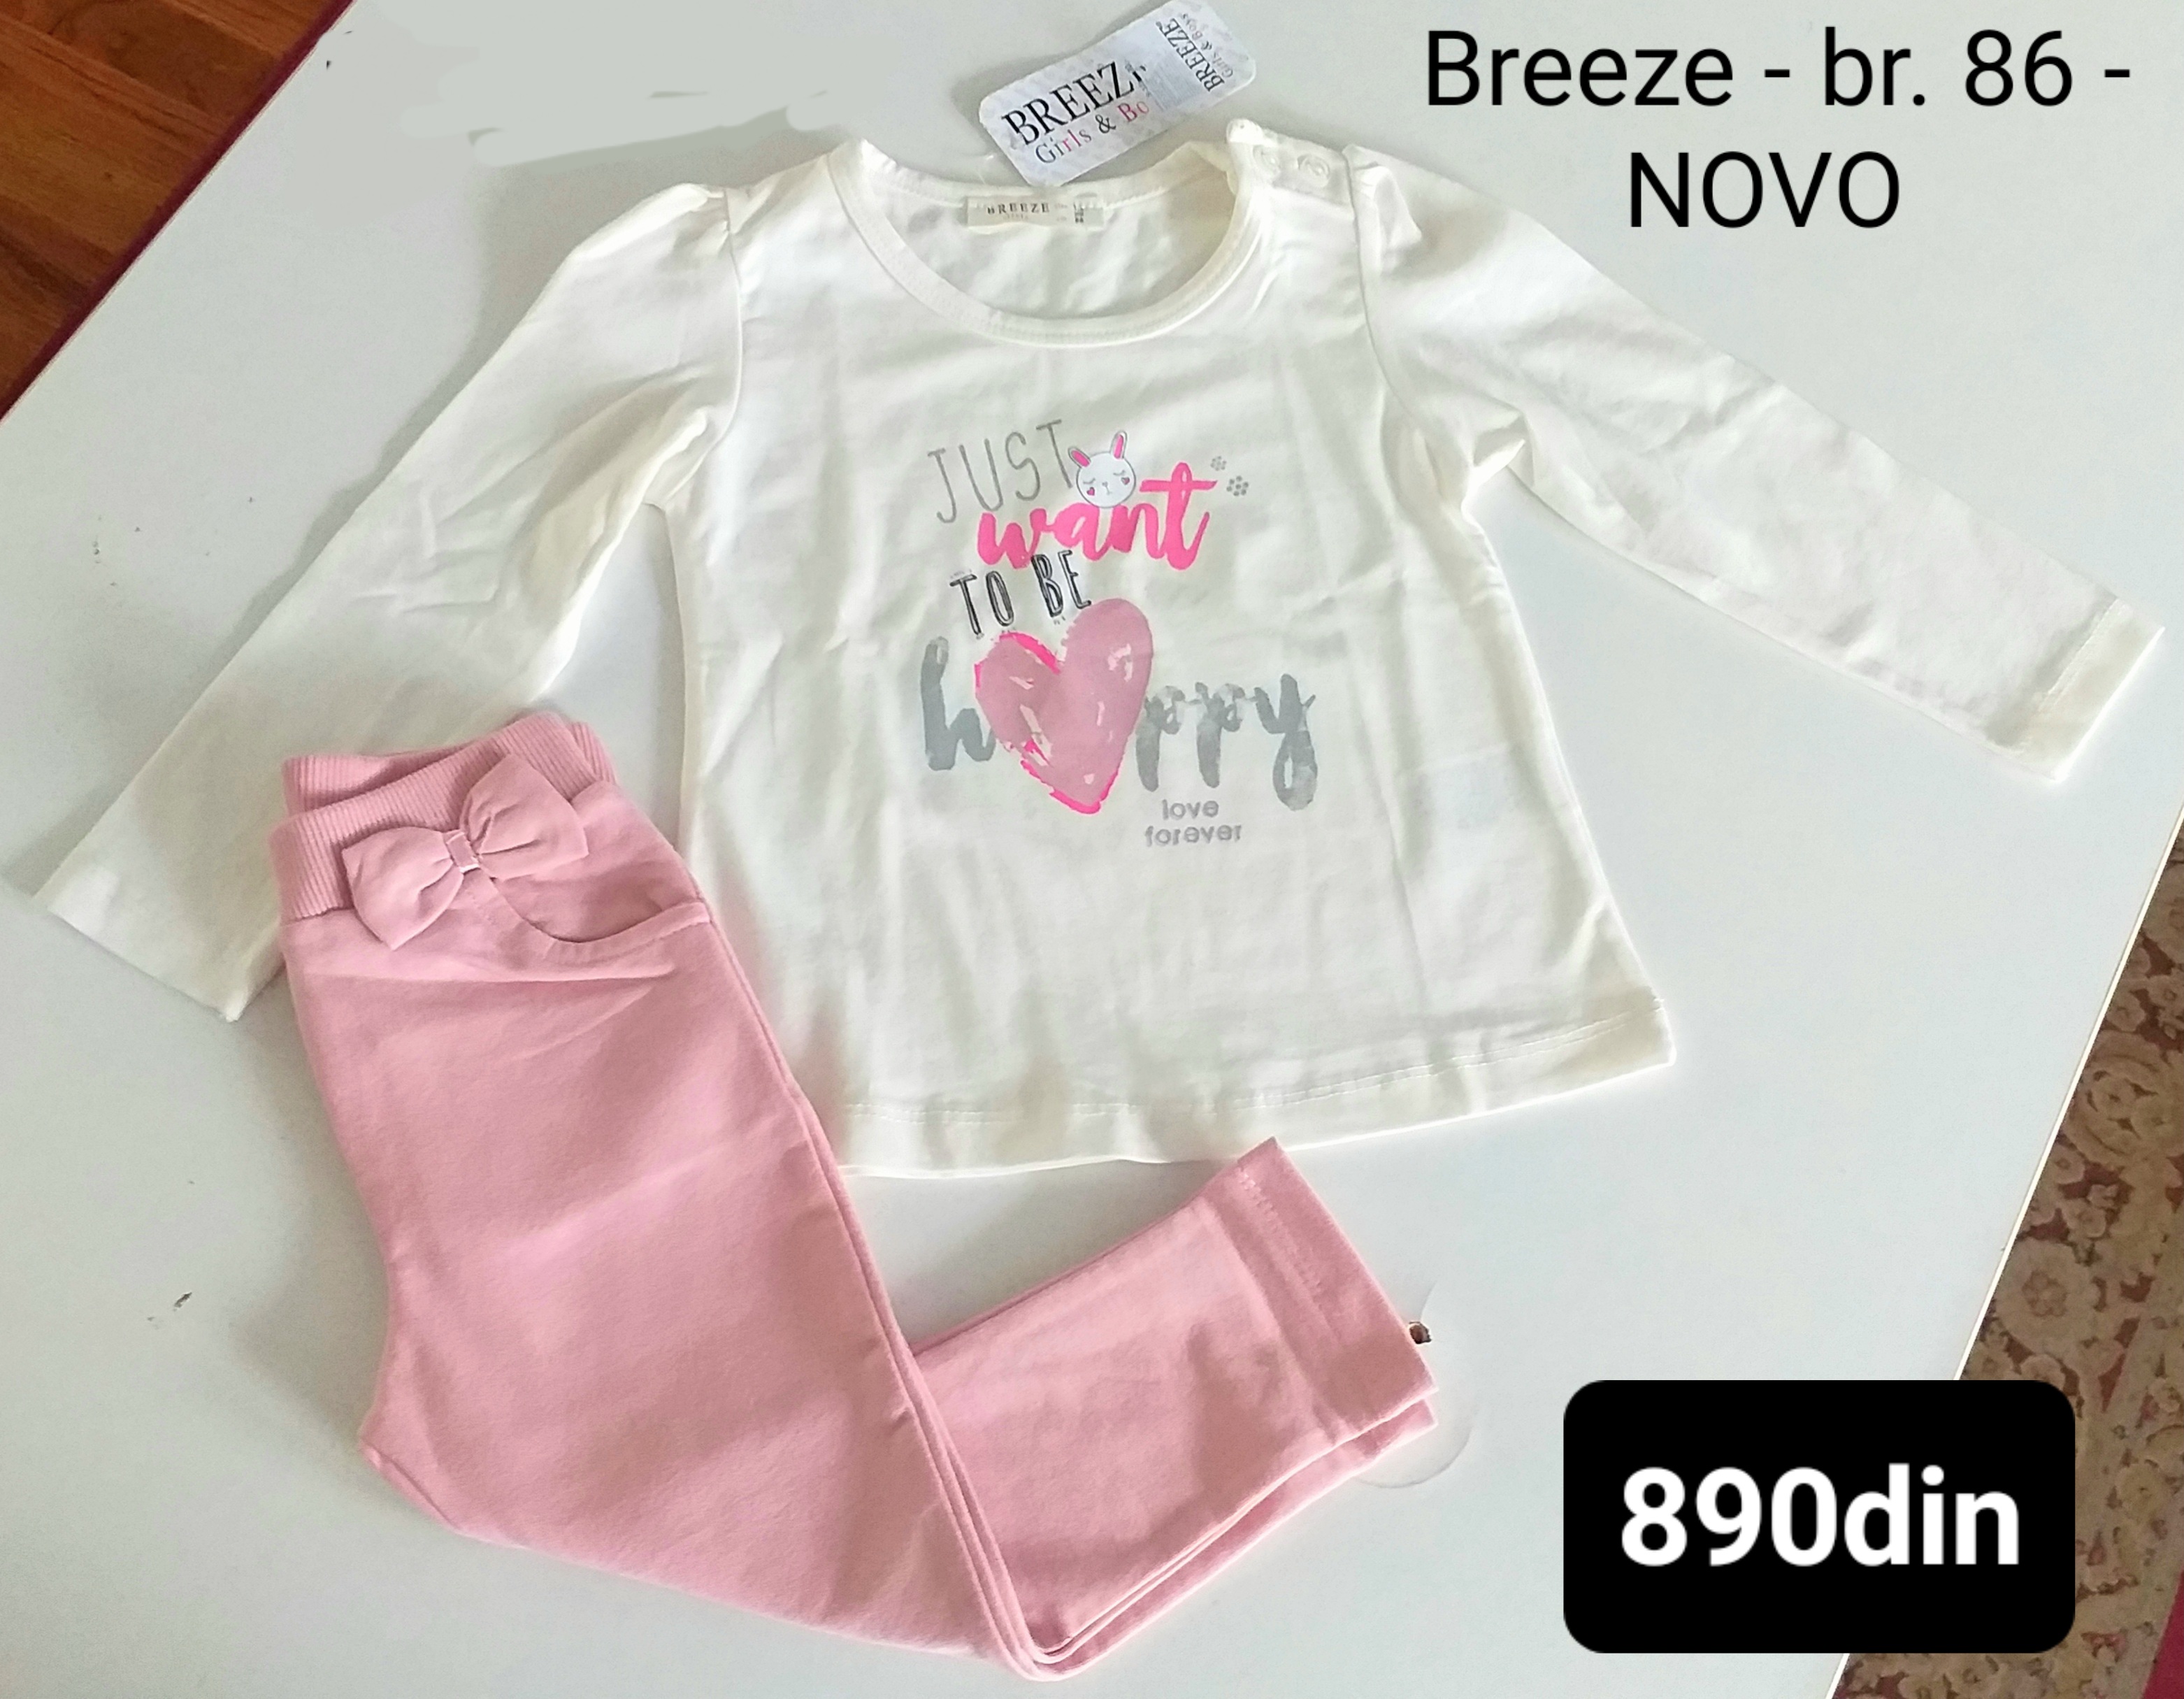 Komplet roze Breeze majica i helanke br. 86 NOVO